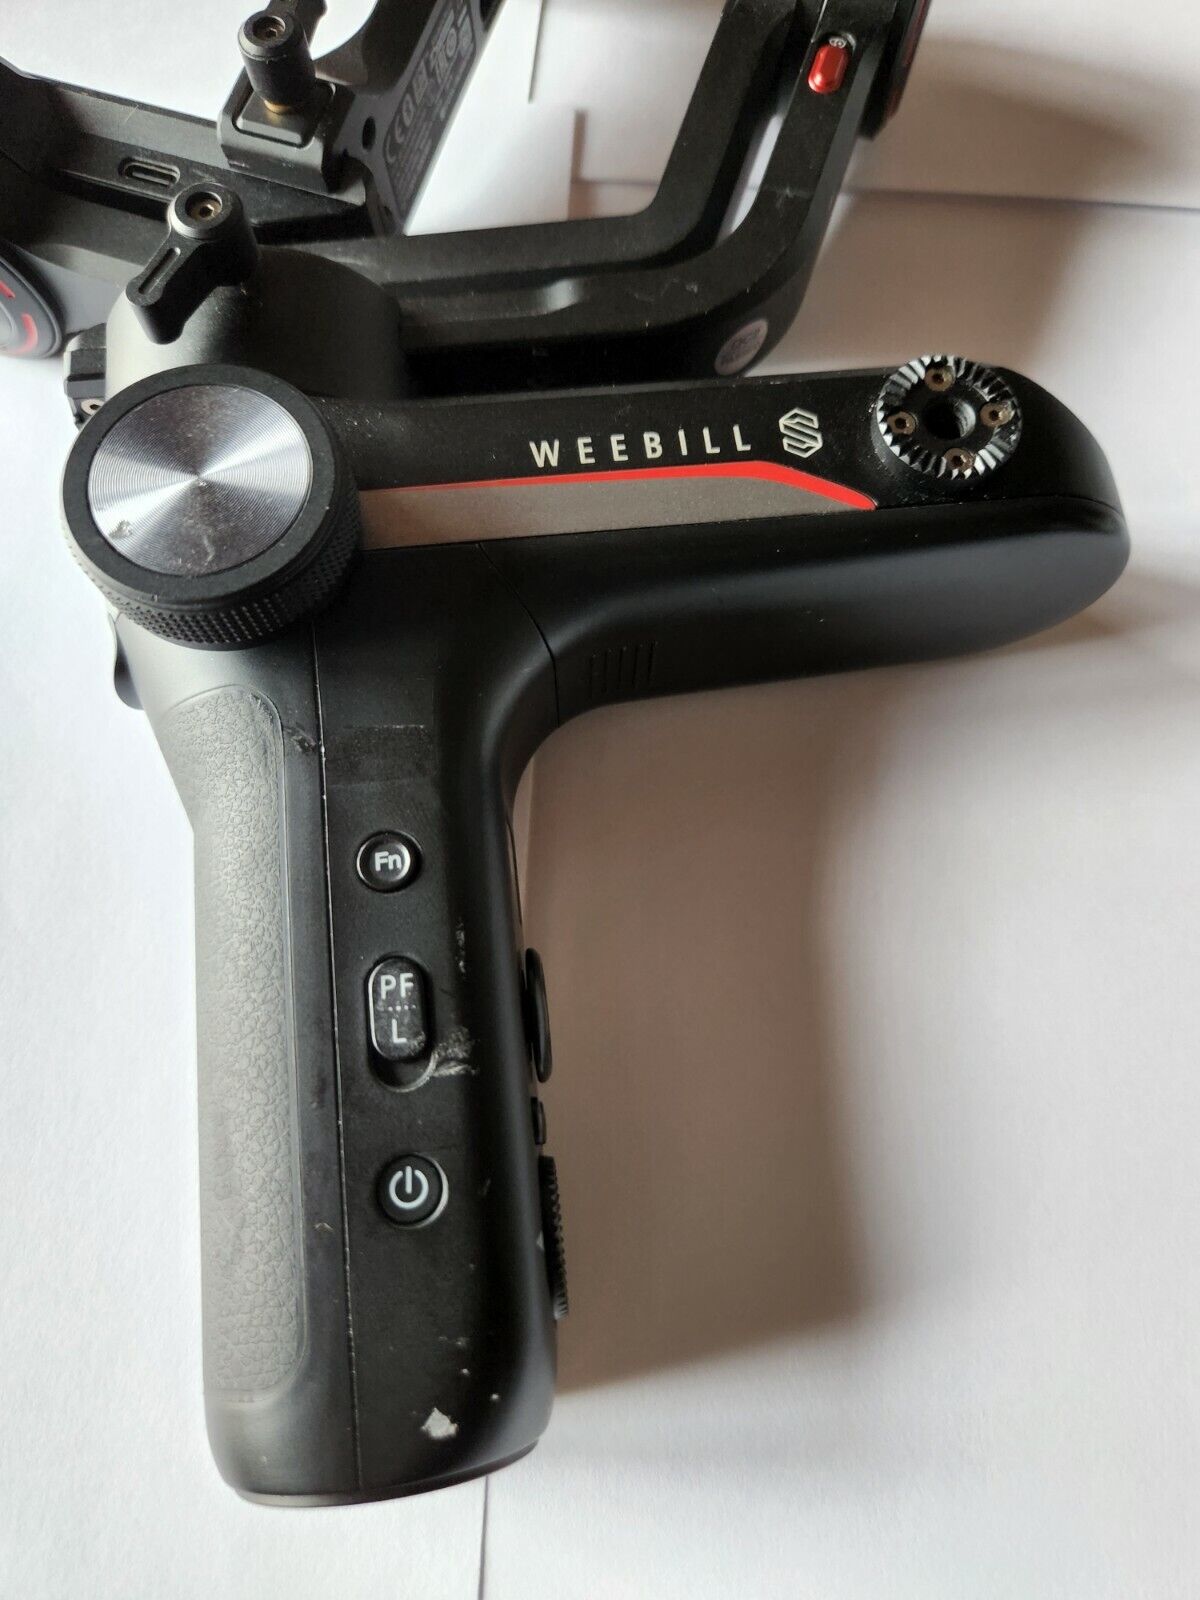 DEFECTIVE Zhiyun Weebill S 3-Axis Handheld Gimbal Stabilizer - NOT WORKING -Read